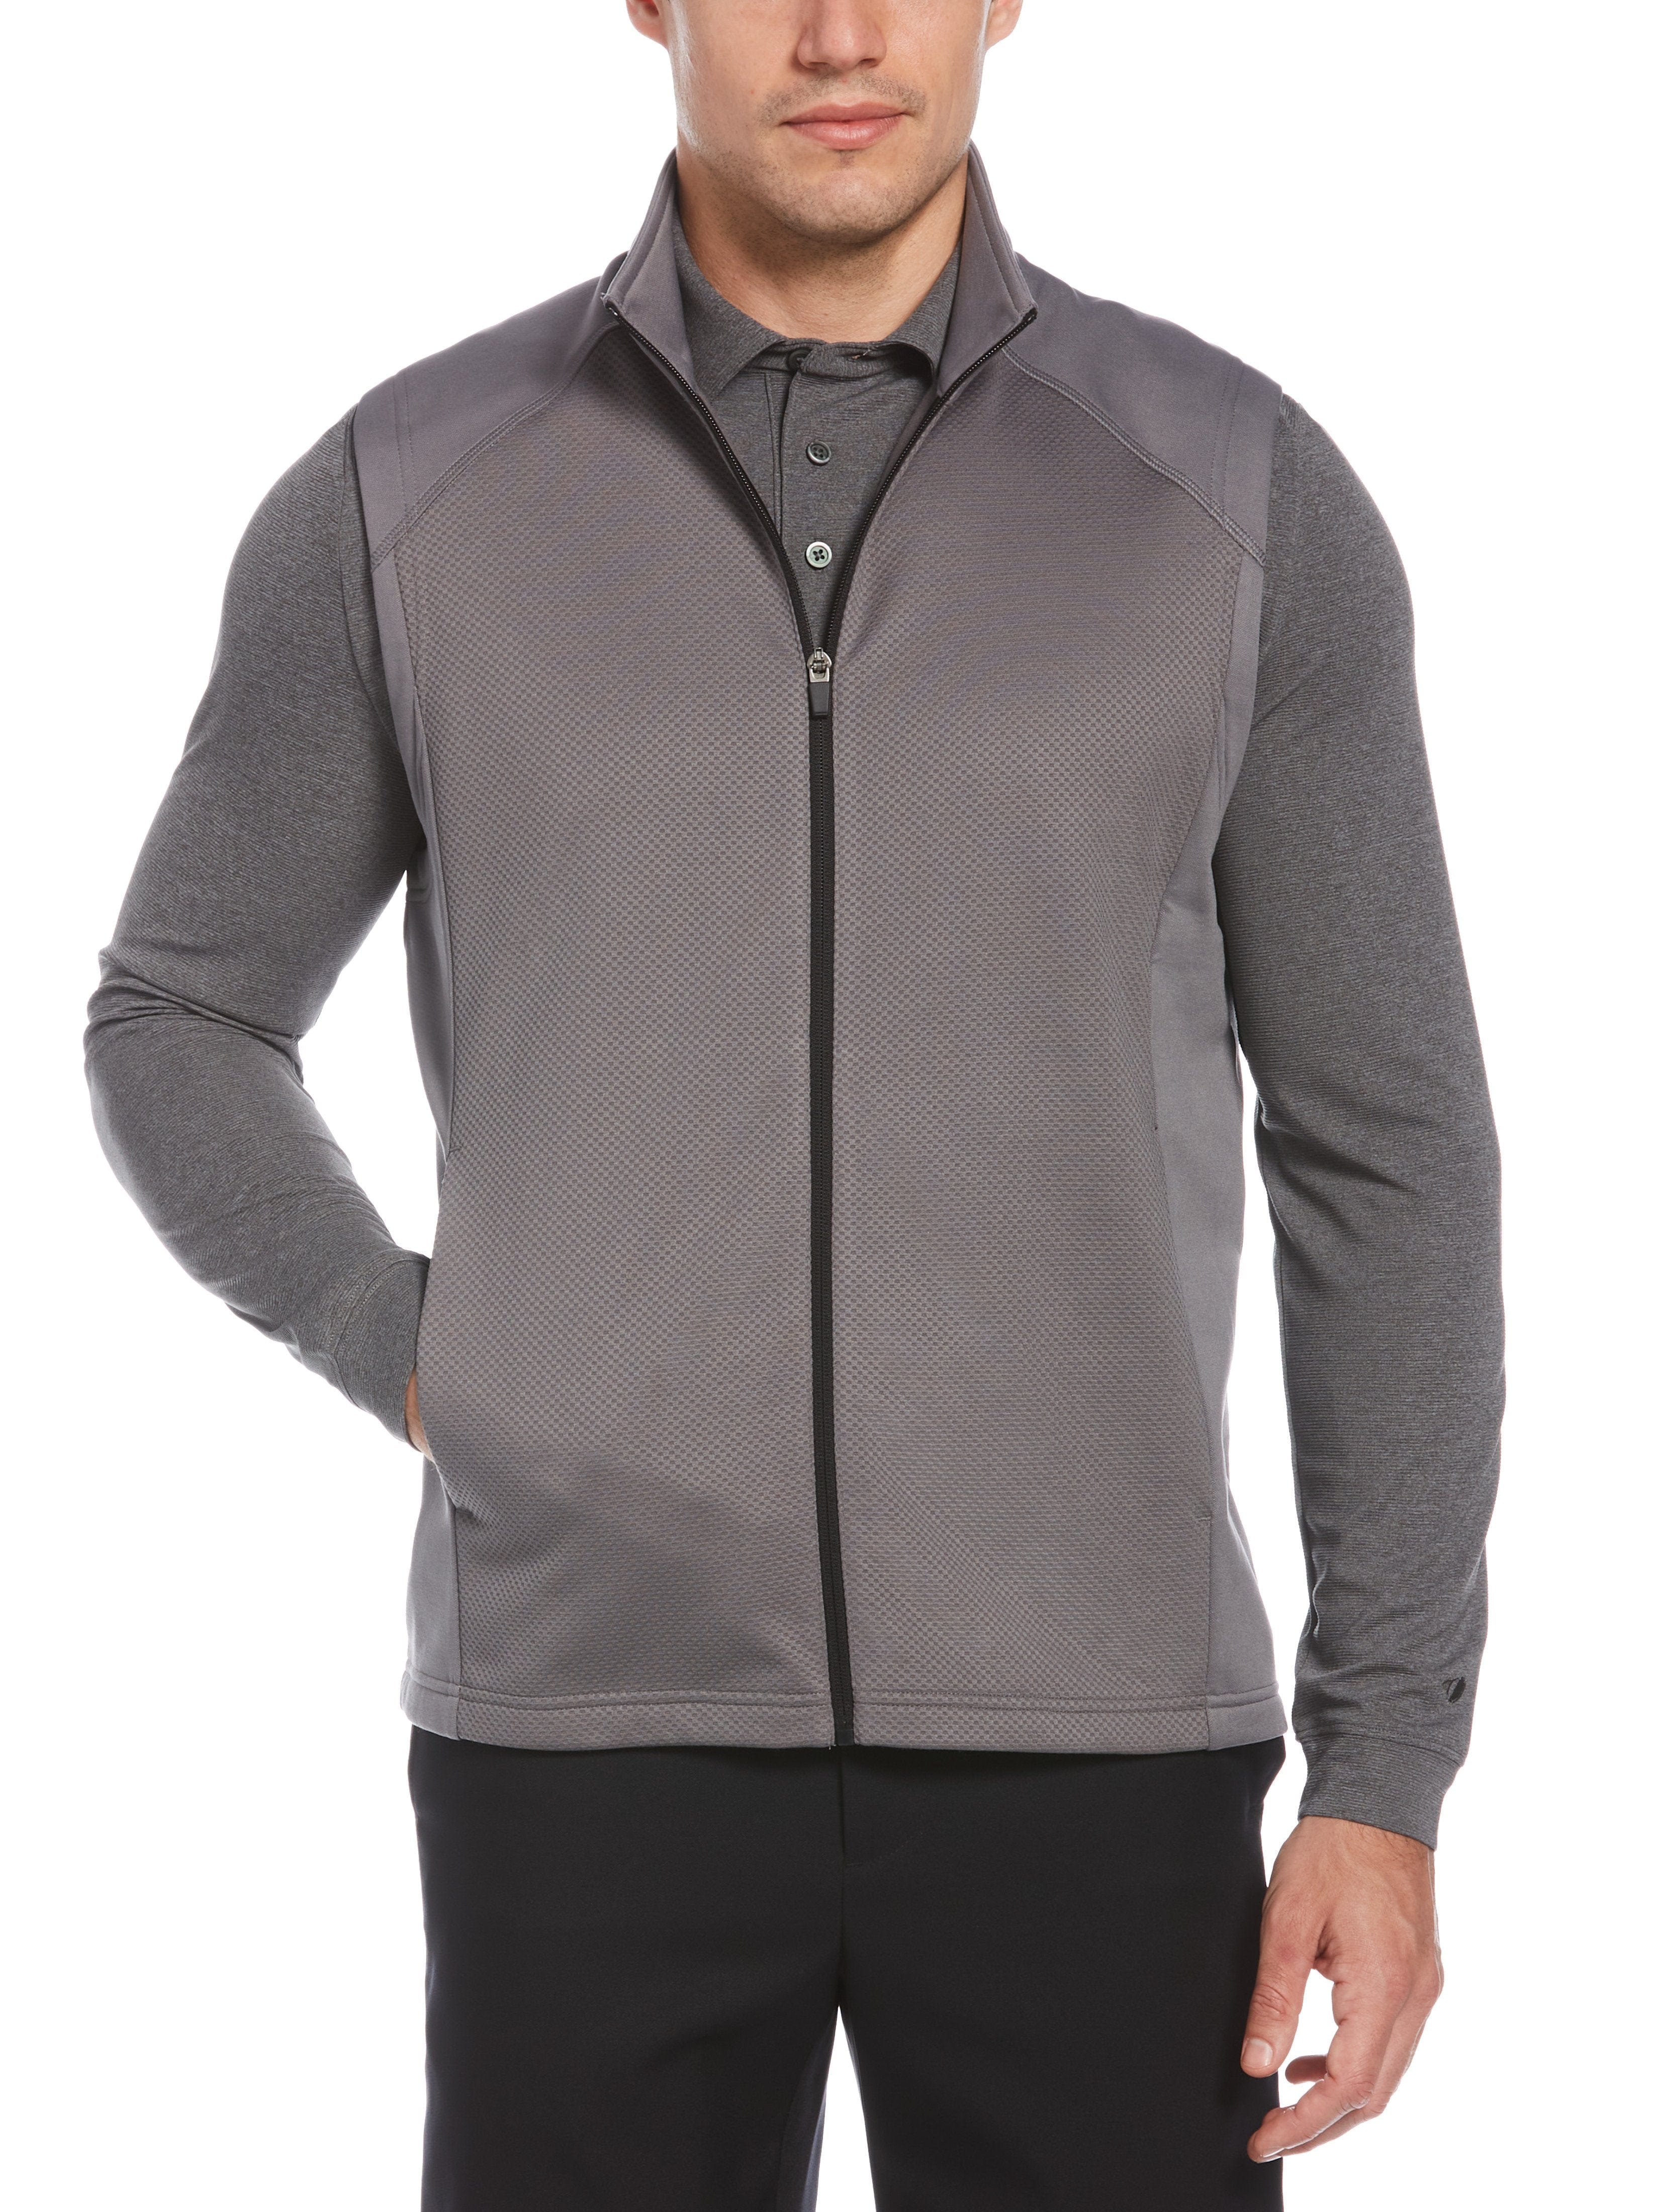 PGA TOUR Apparel Mens Mixed Texture Fleece Golf Vest Top, Size Medium, Quiet Shade Gray, 100% Polyester | Golf Apparel Shop